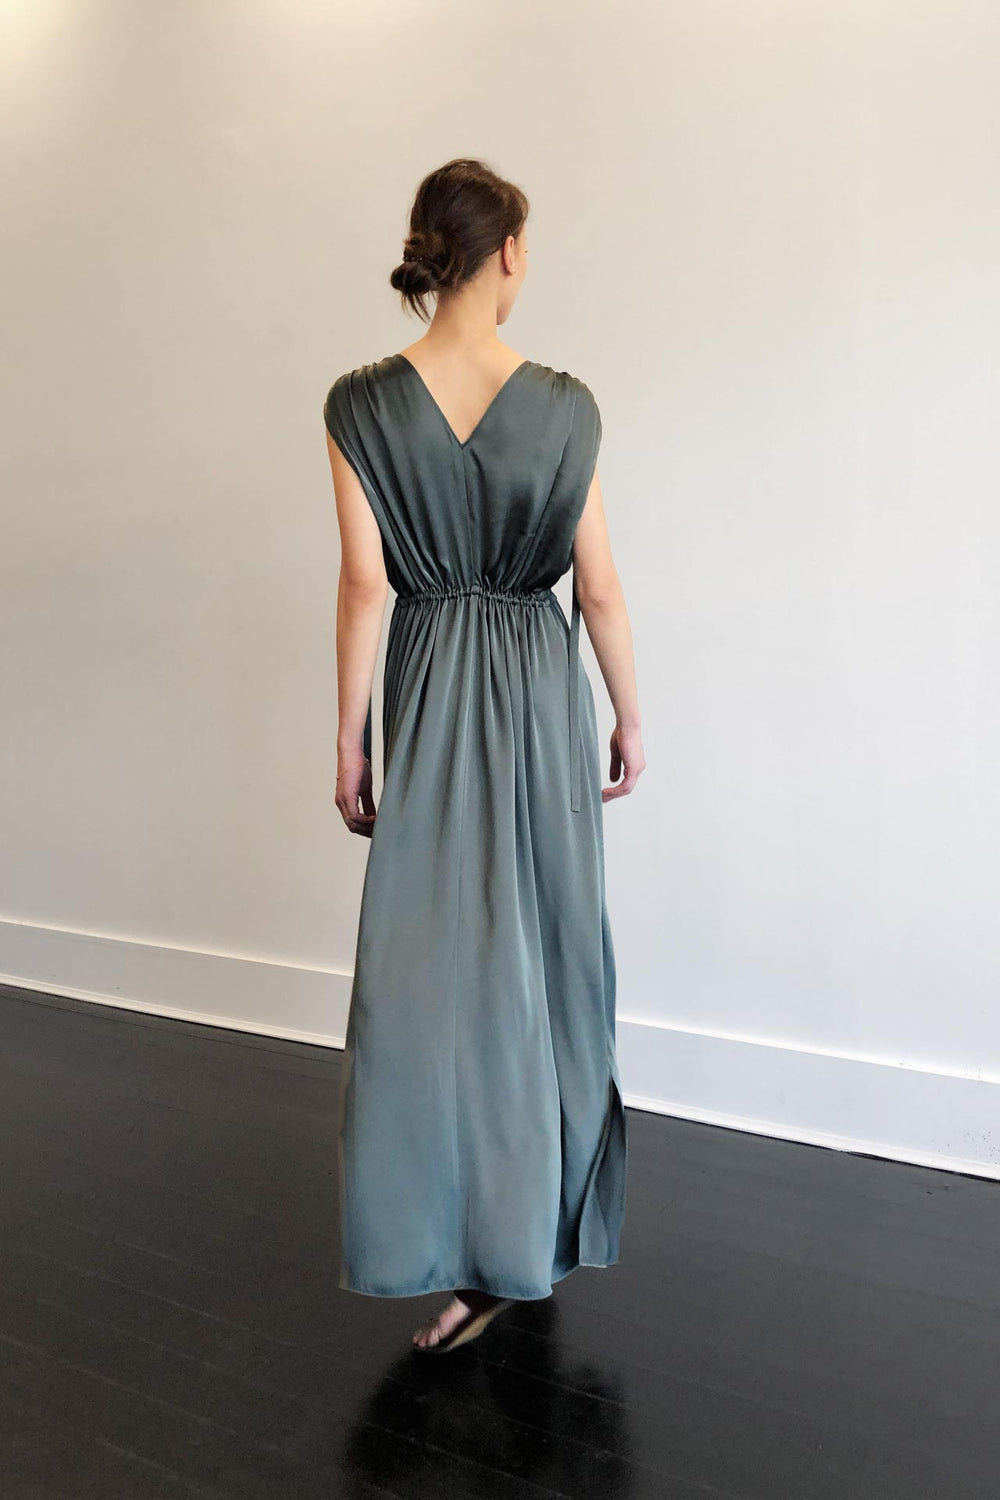 Fashion Designer CARL KAPP collection | Voyager Onesize Fits All formal dress grey | Sydney Australia